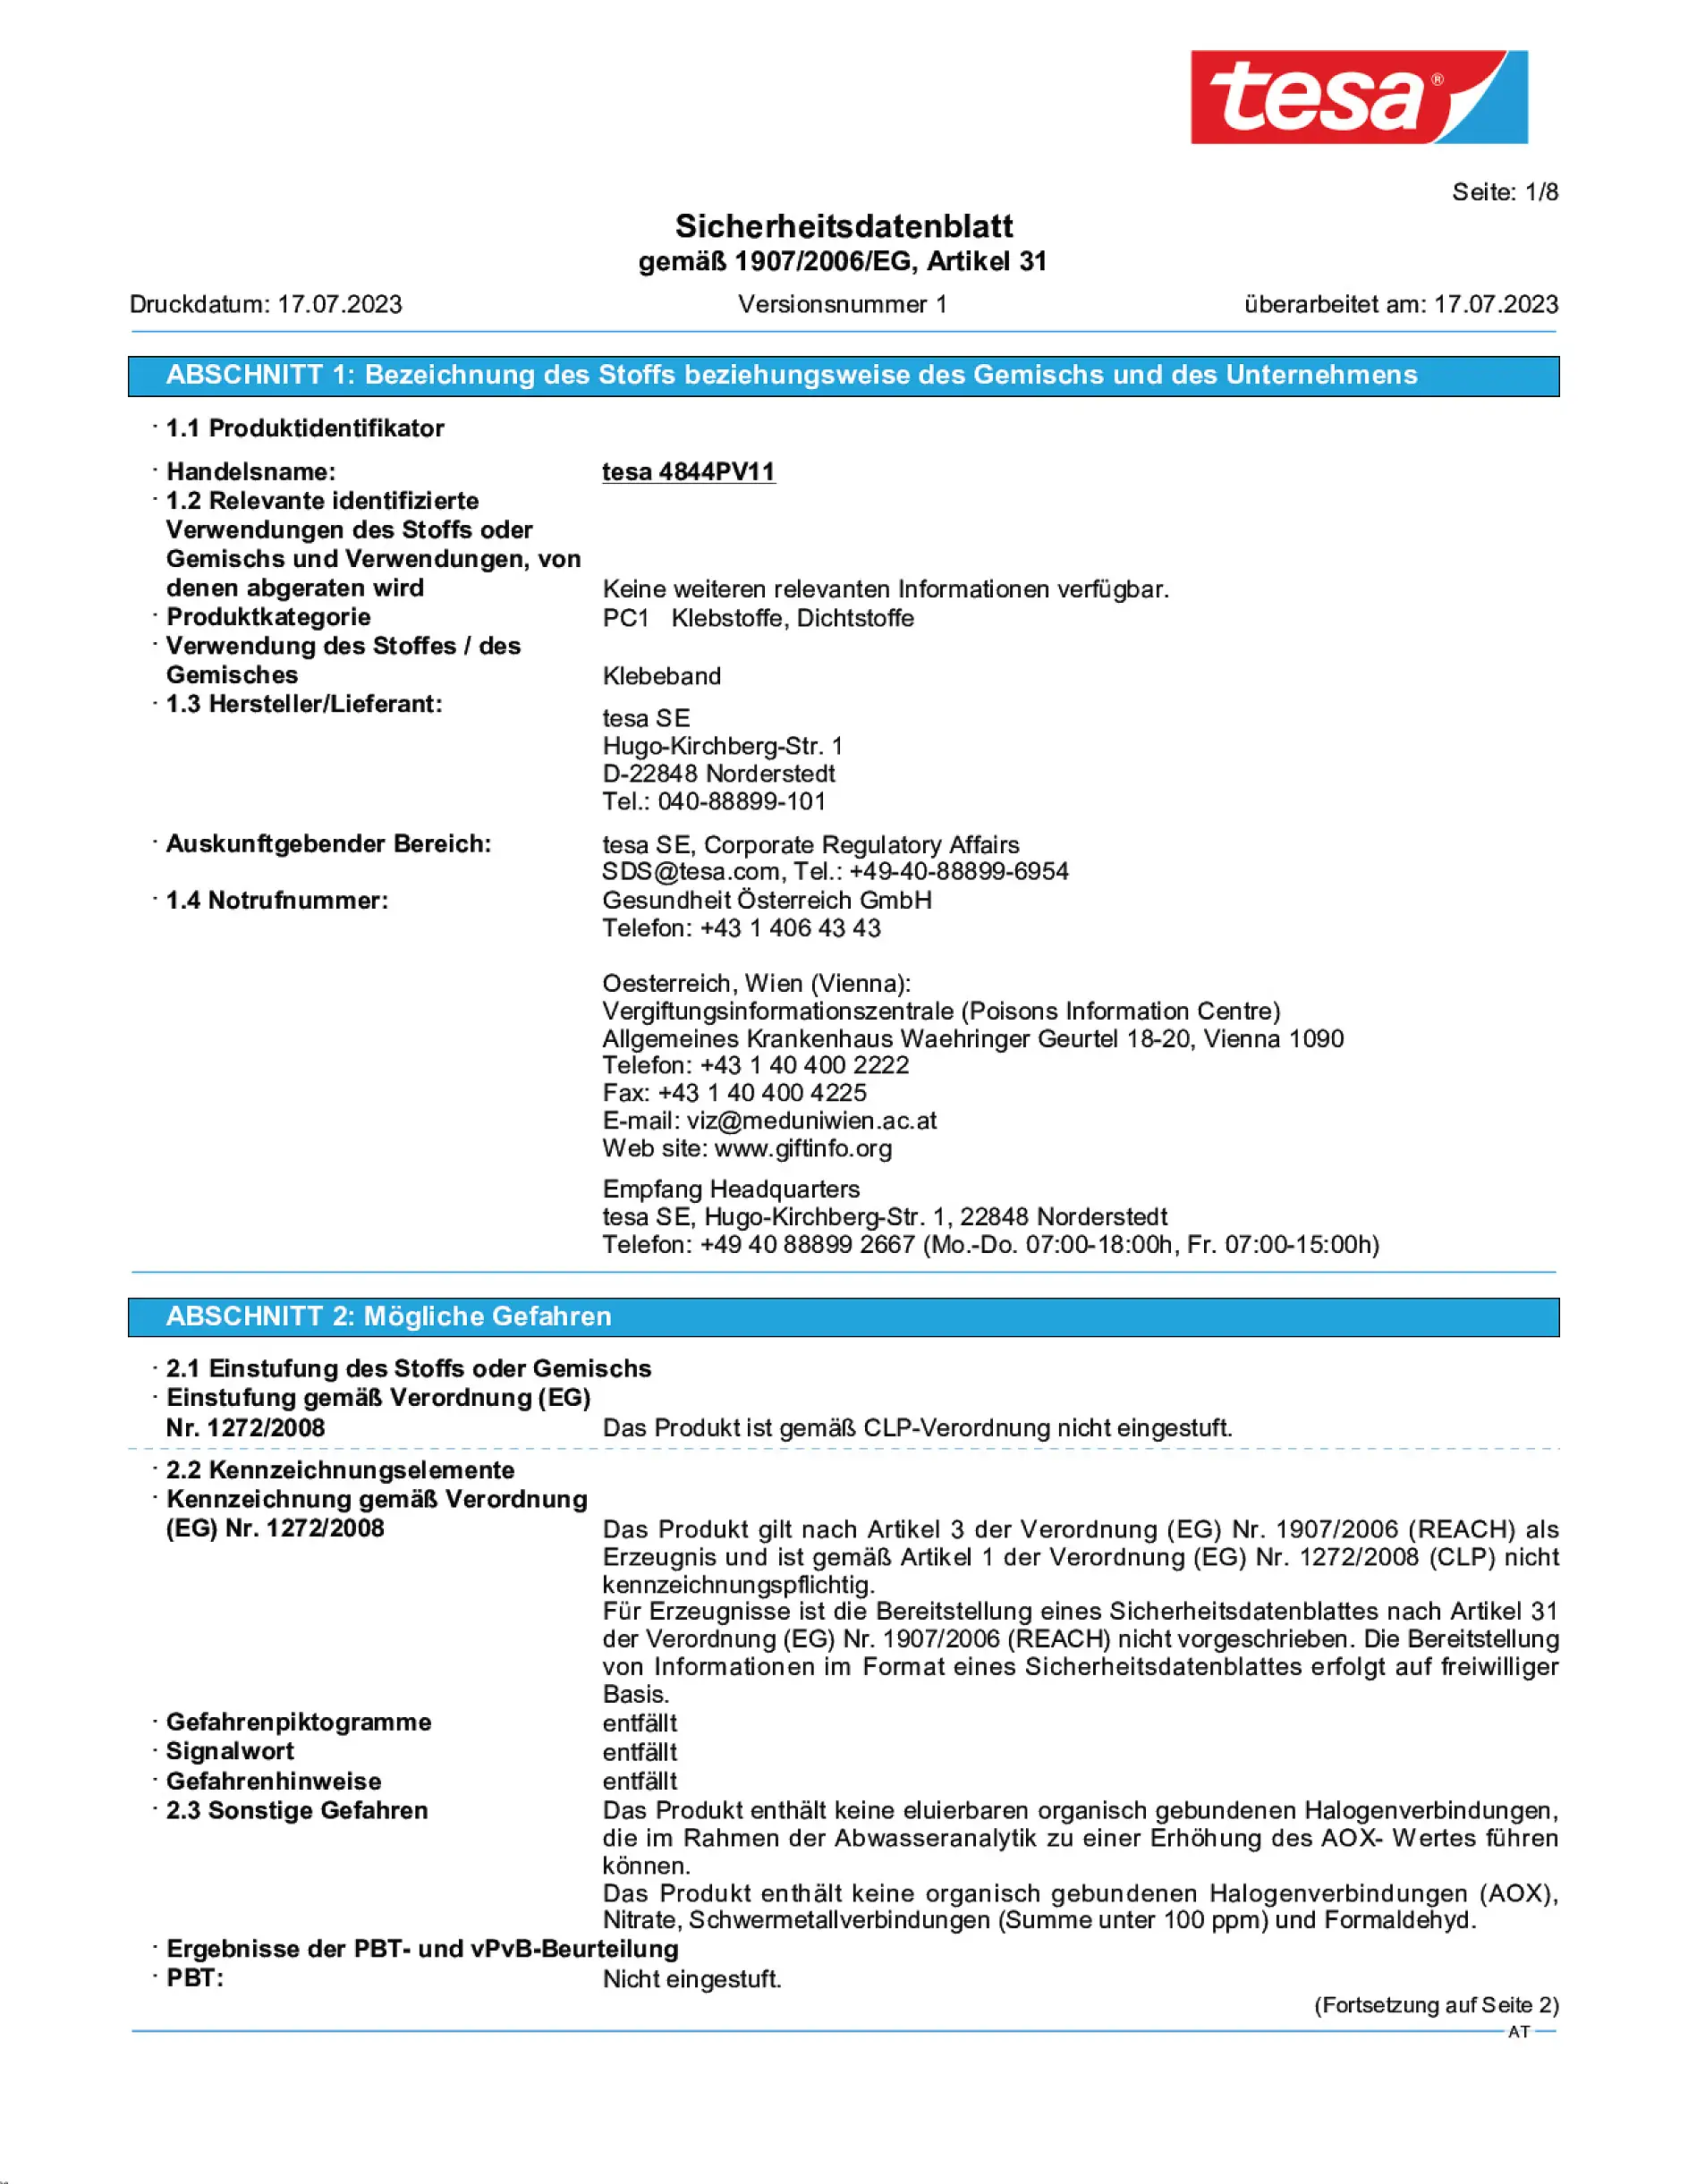 Safety data sheet_tesa® Professional 67001_de-AT_v1